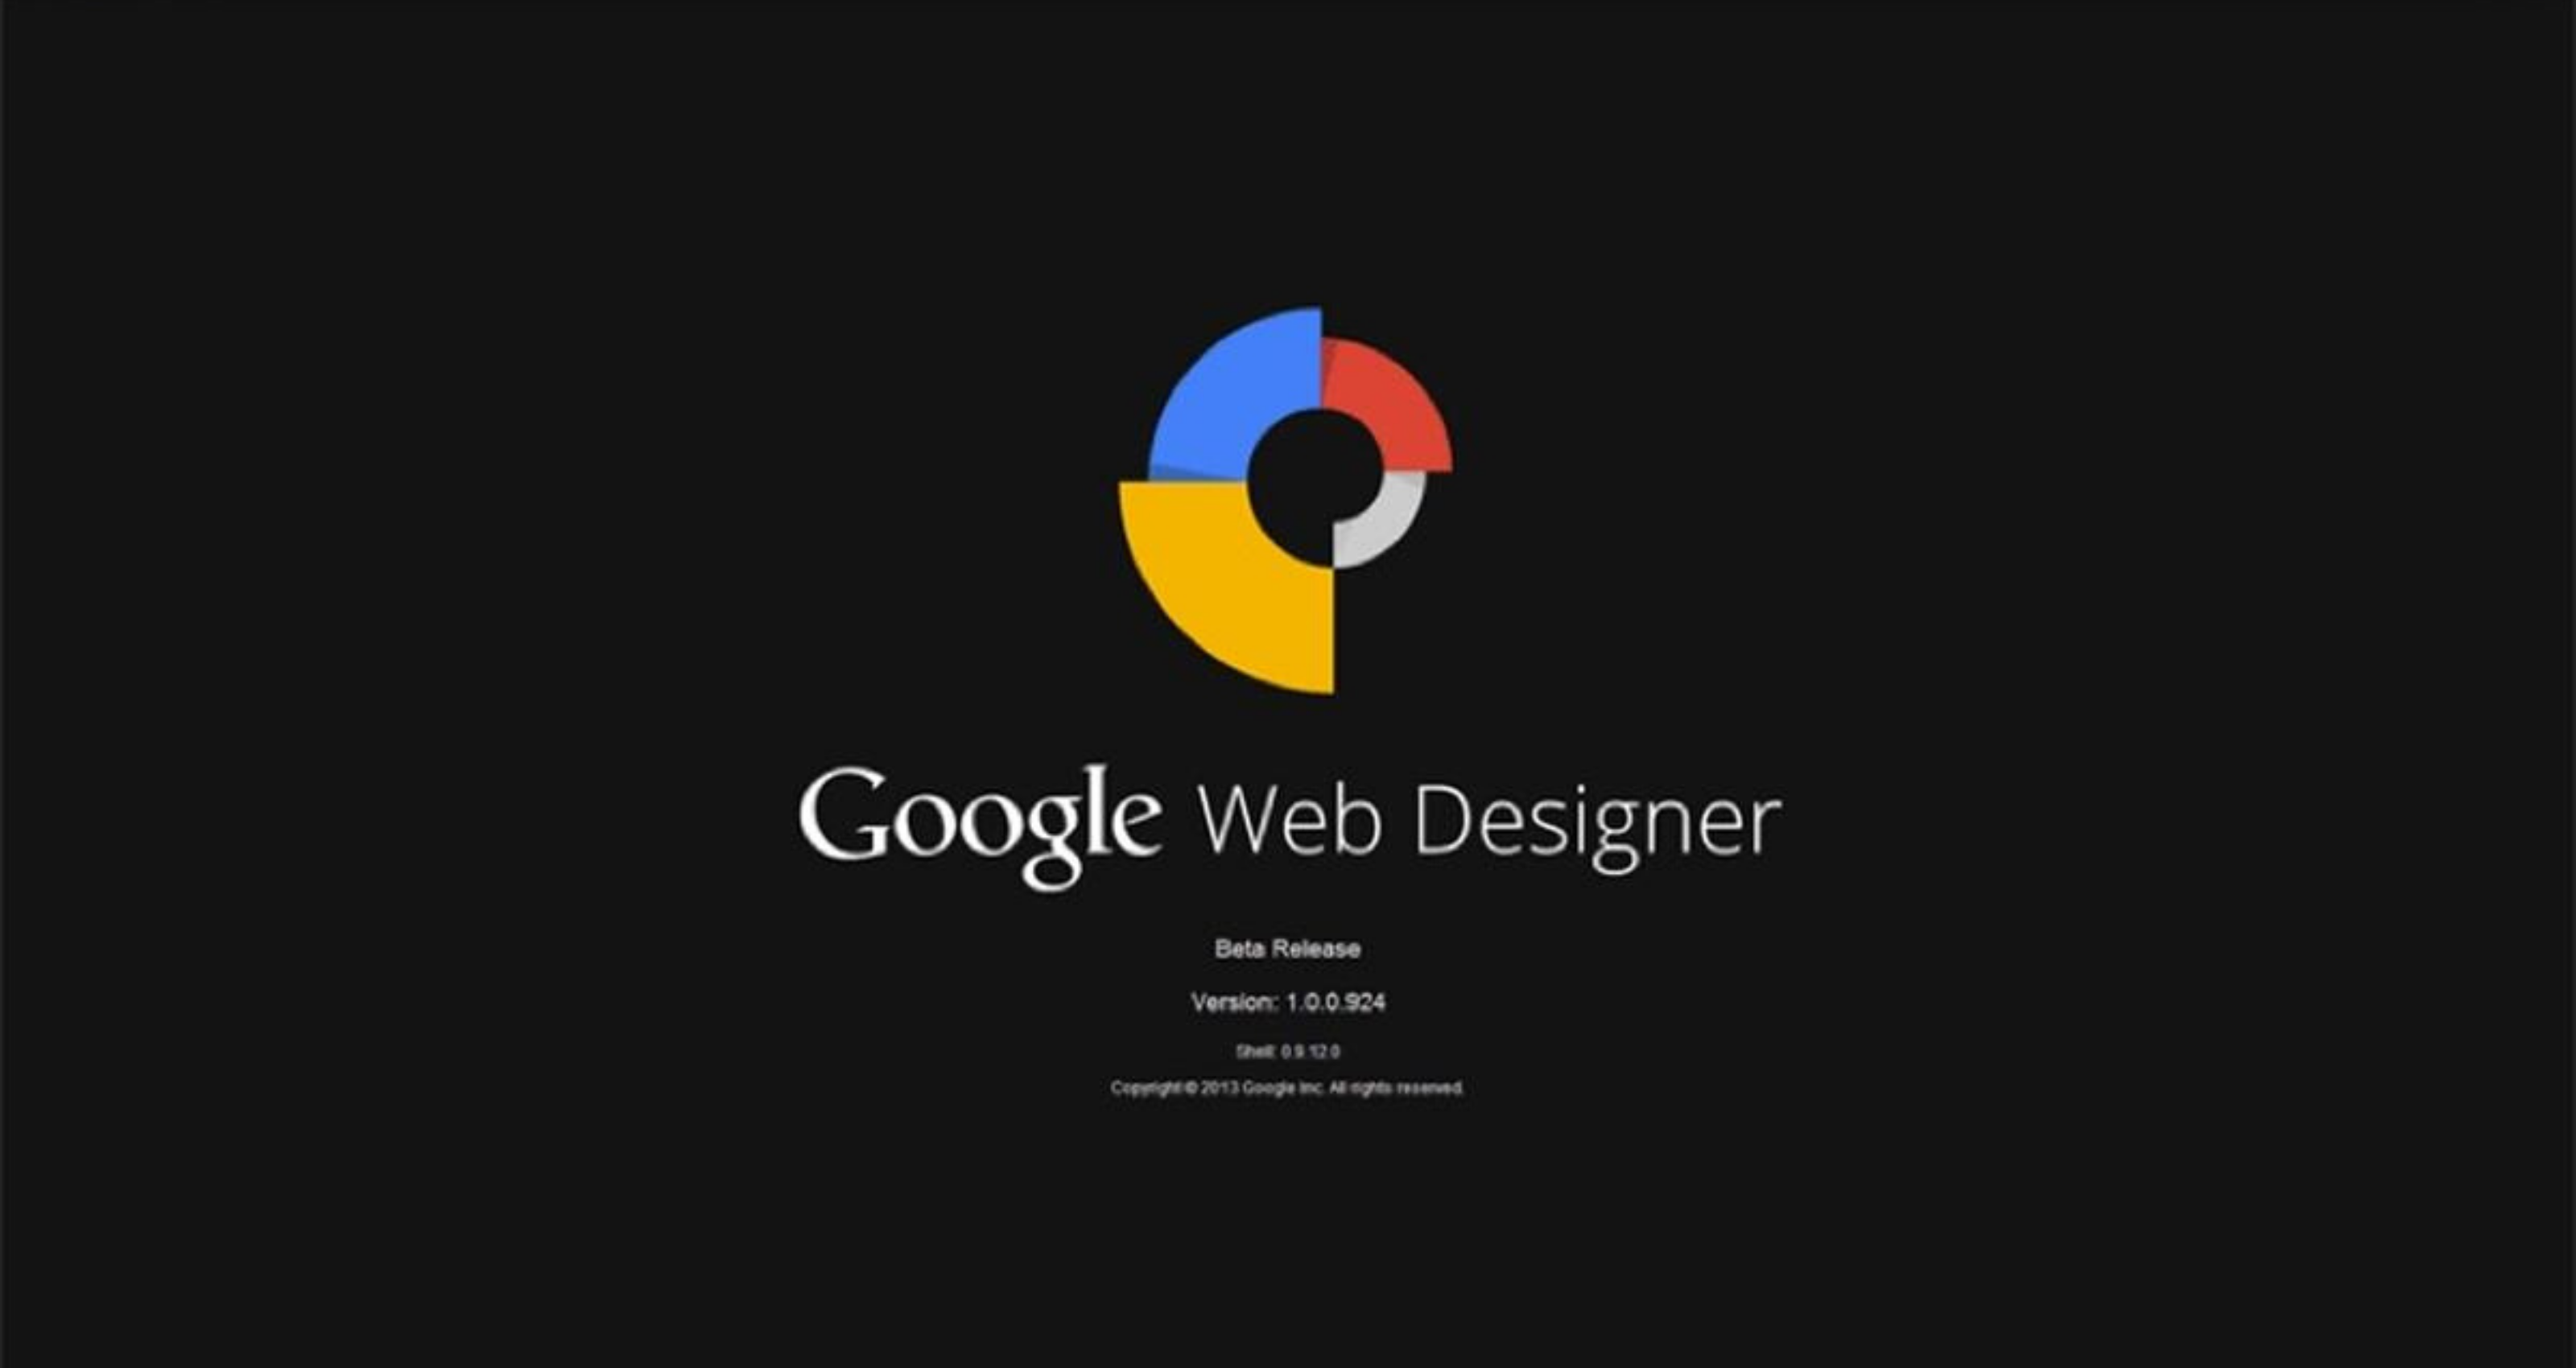 An Introduction to Google Web Designer